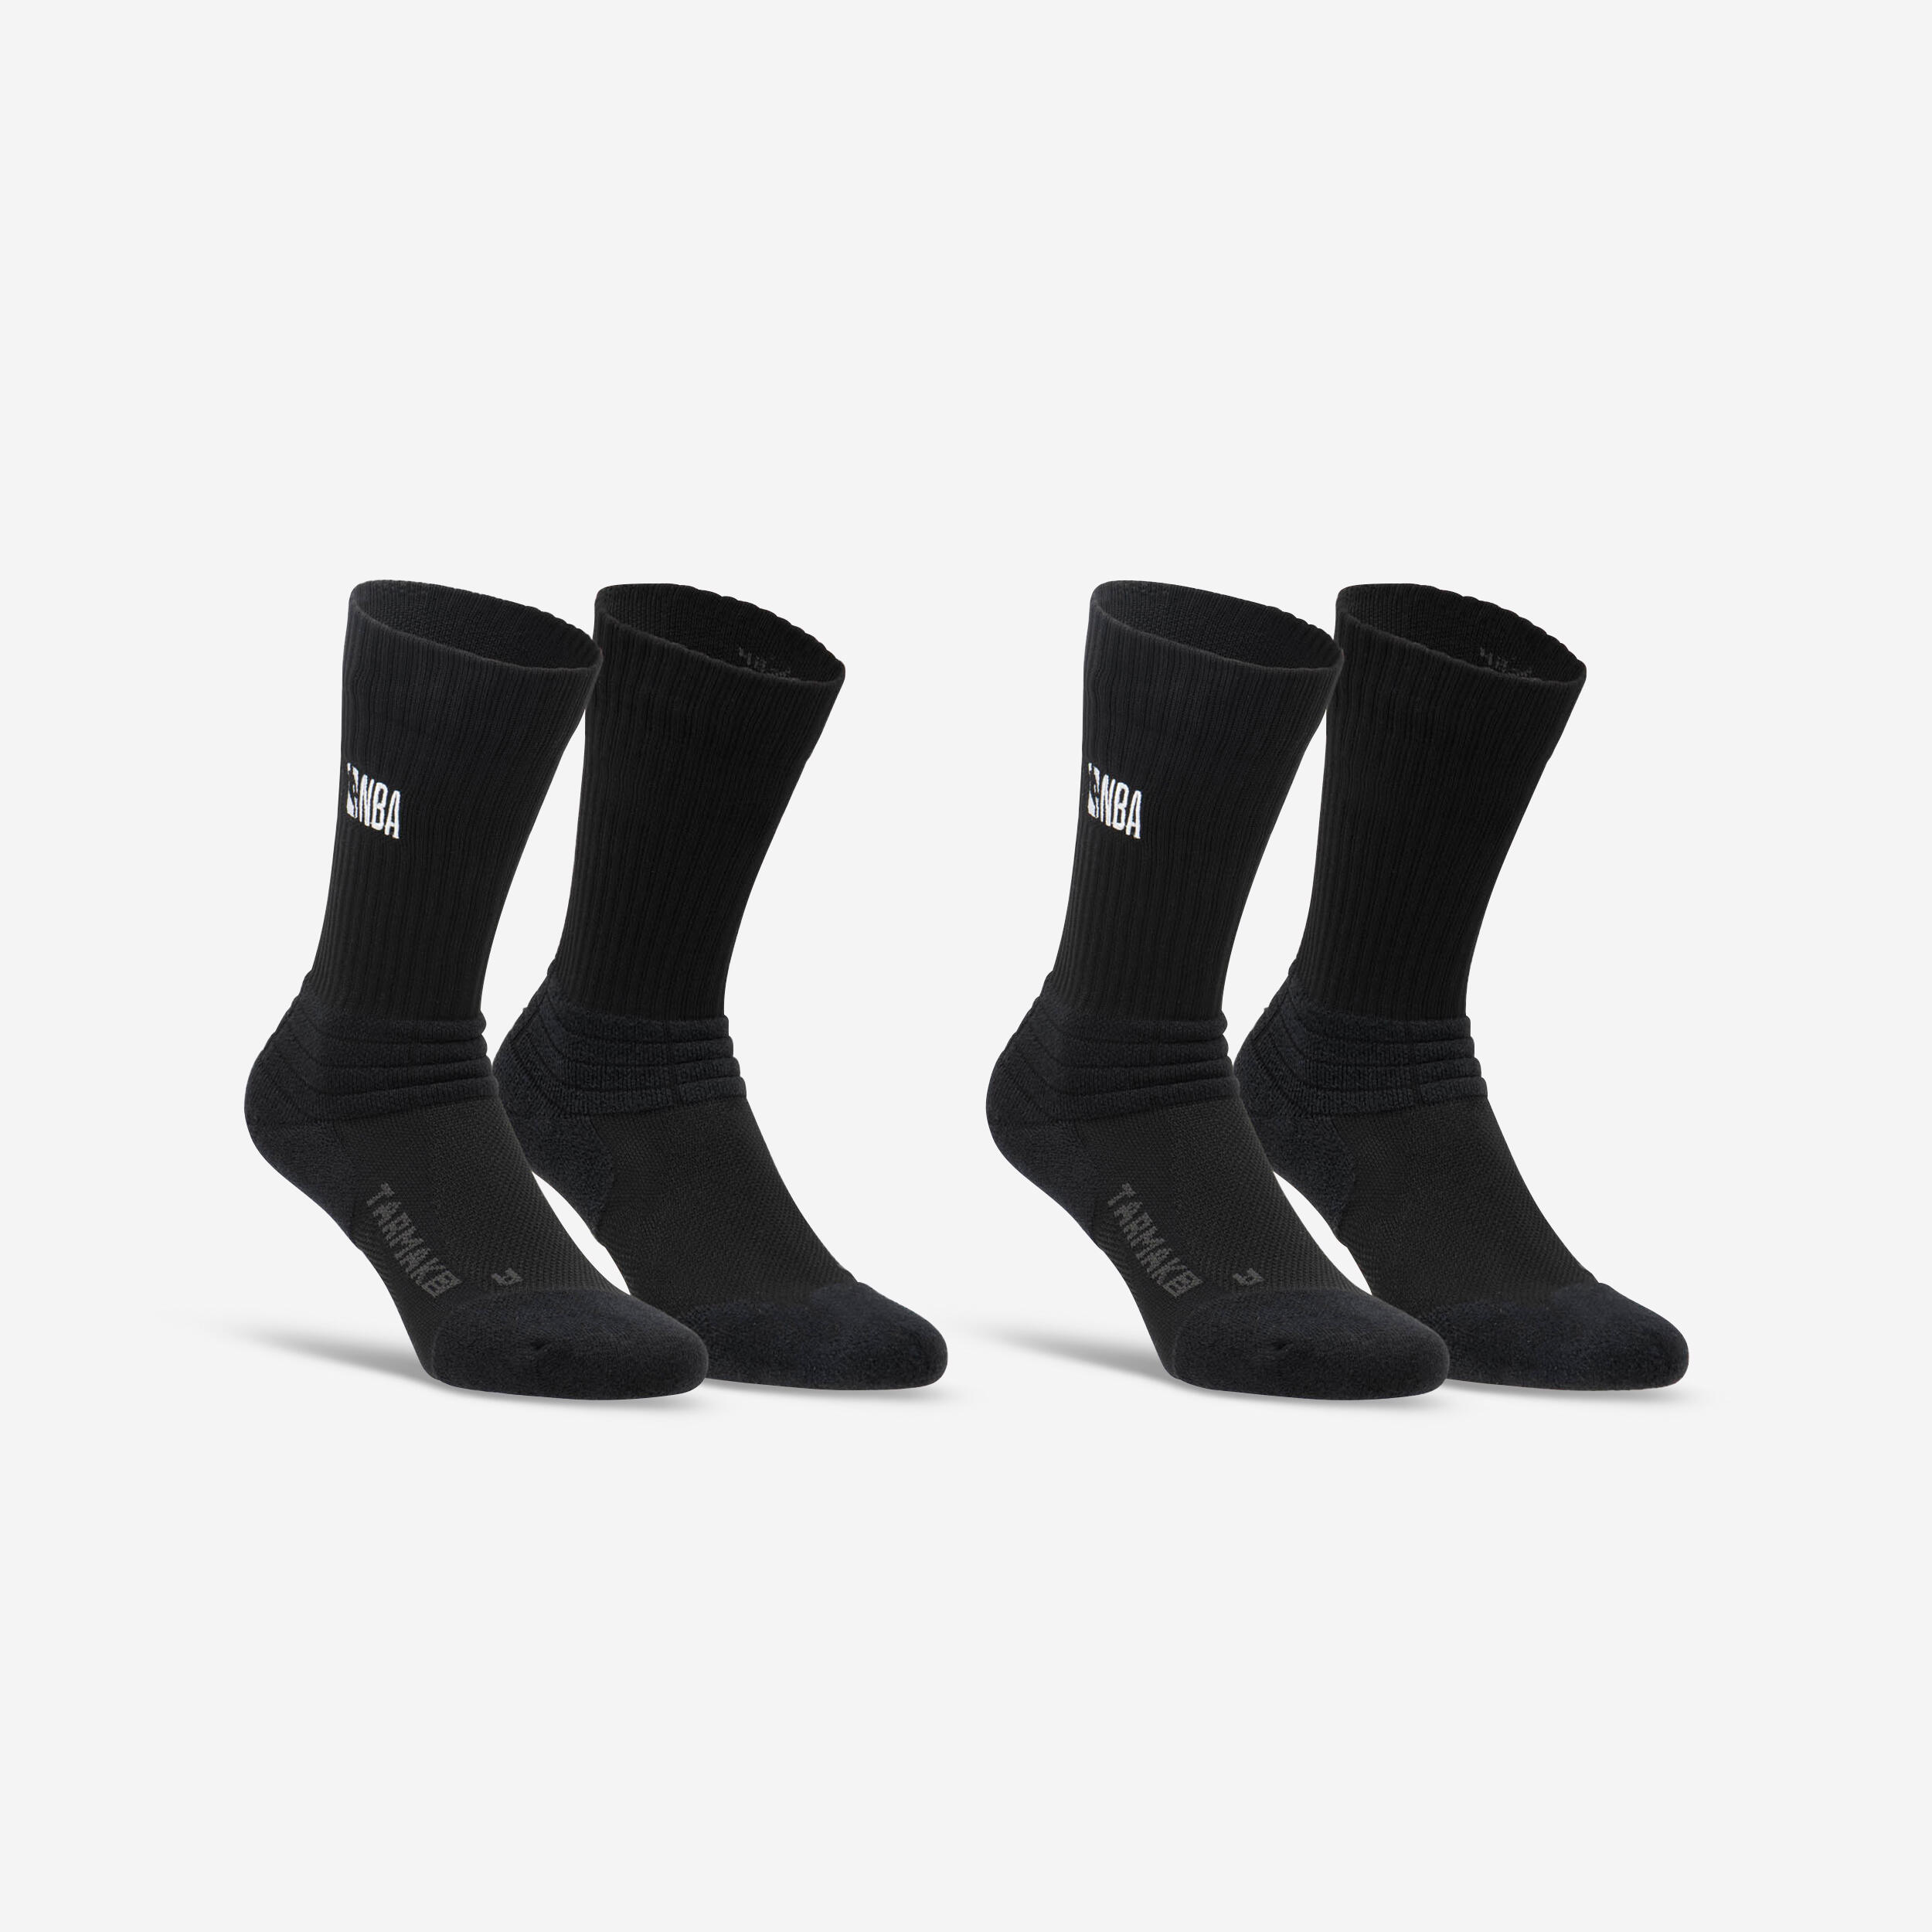 TARMAK Men's/Women's Low-Rise NBA Basketball Socks SO900 Twin-Pack - Black